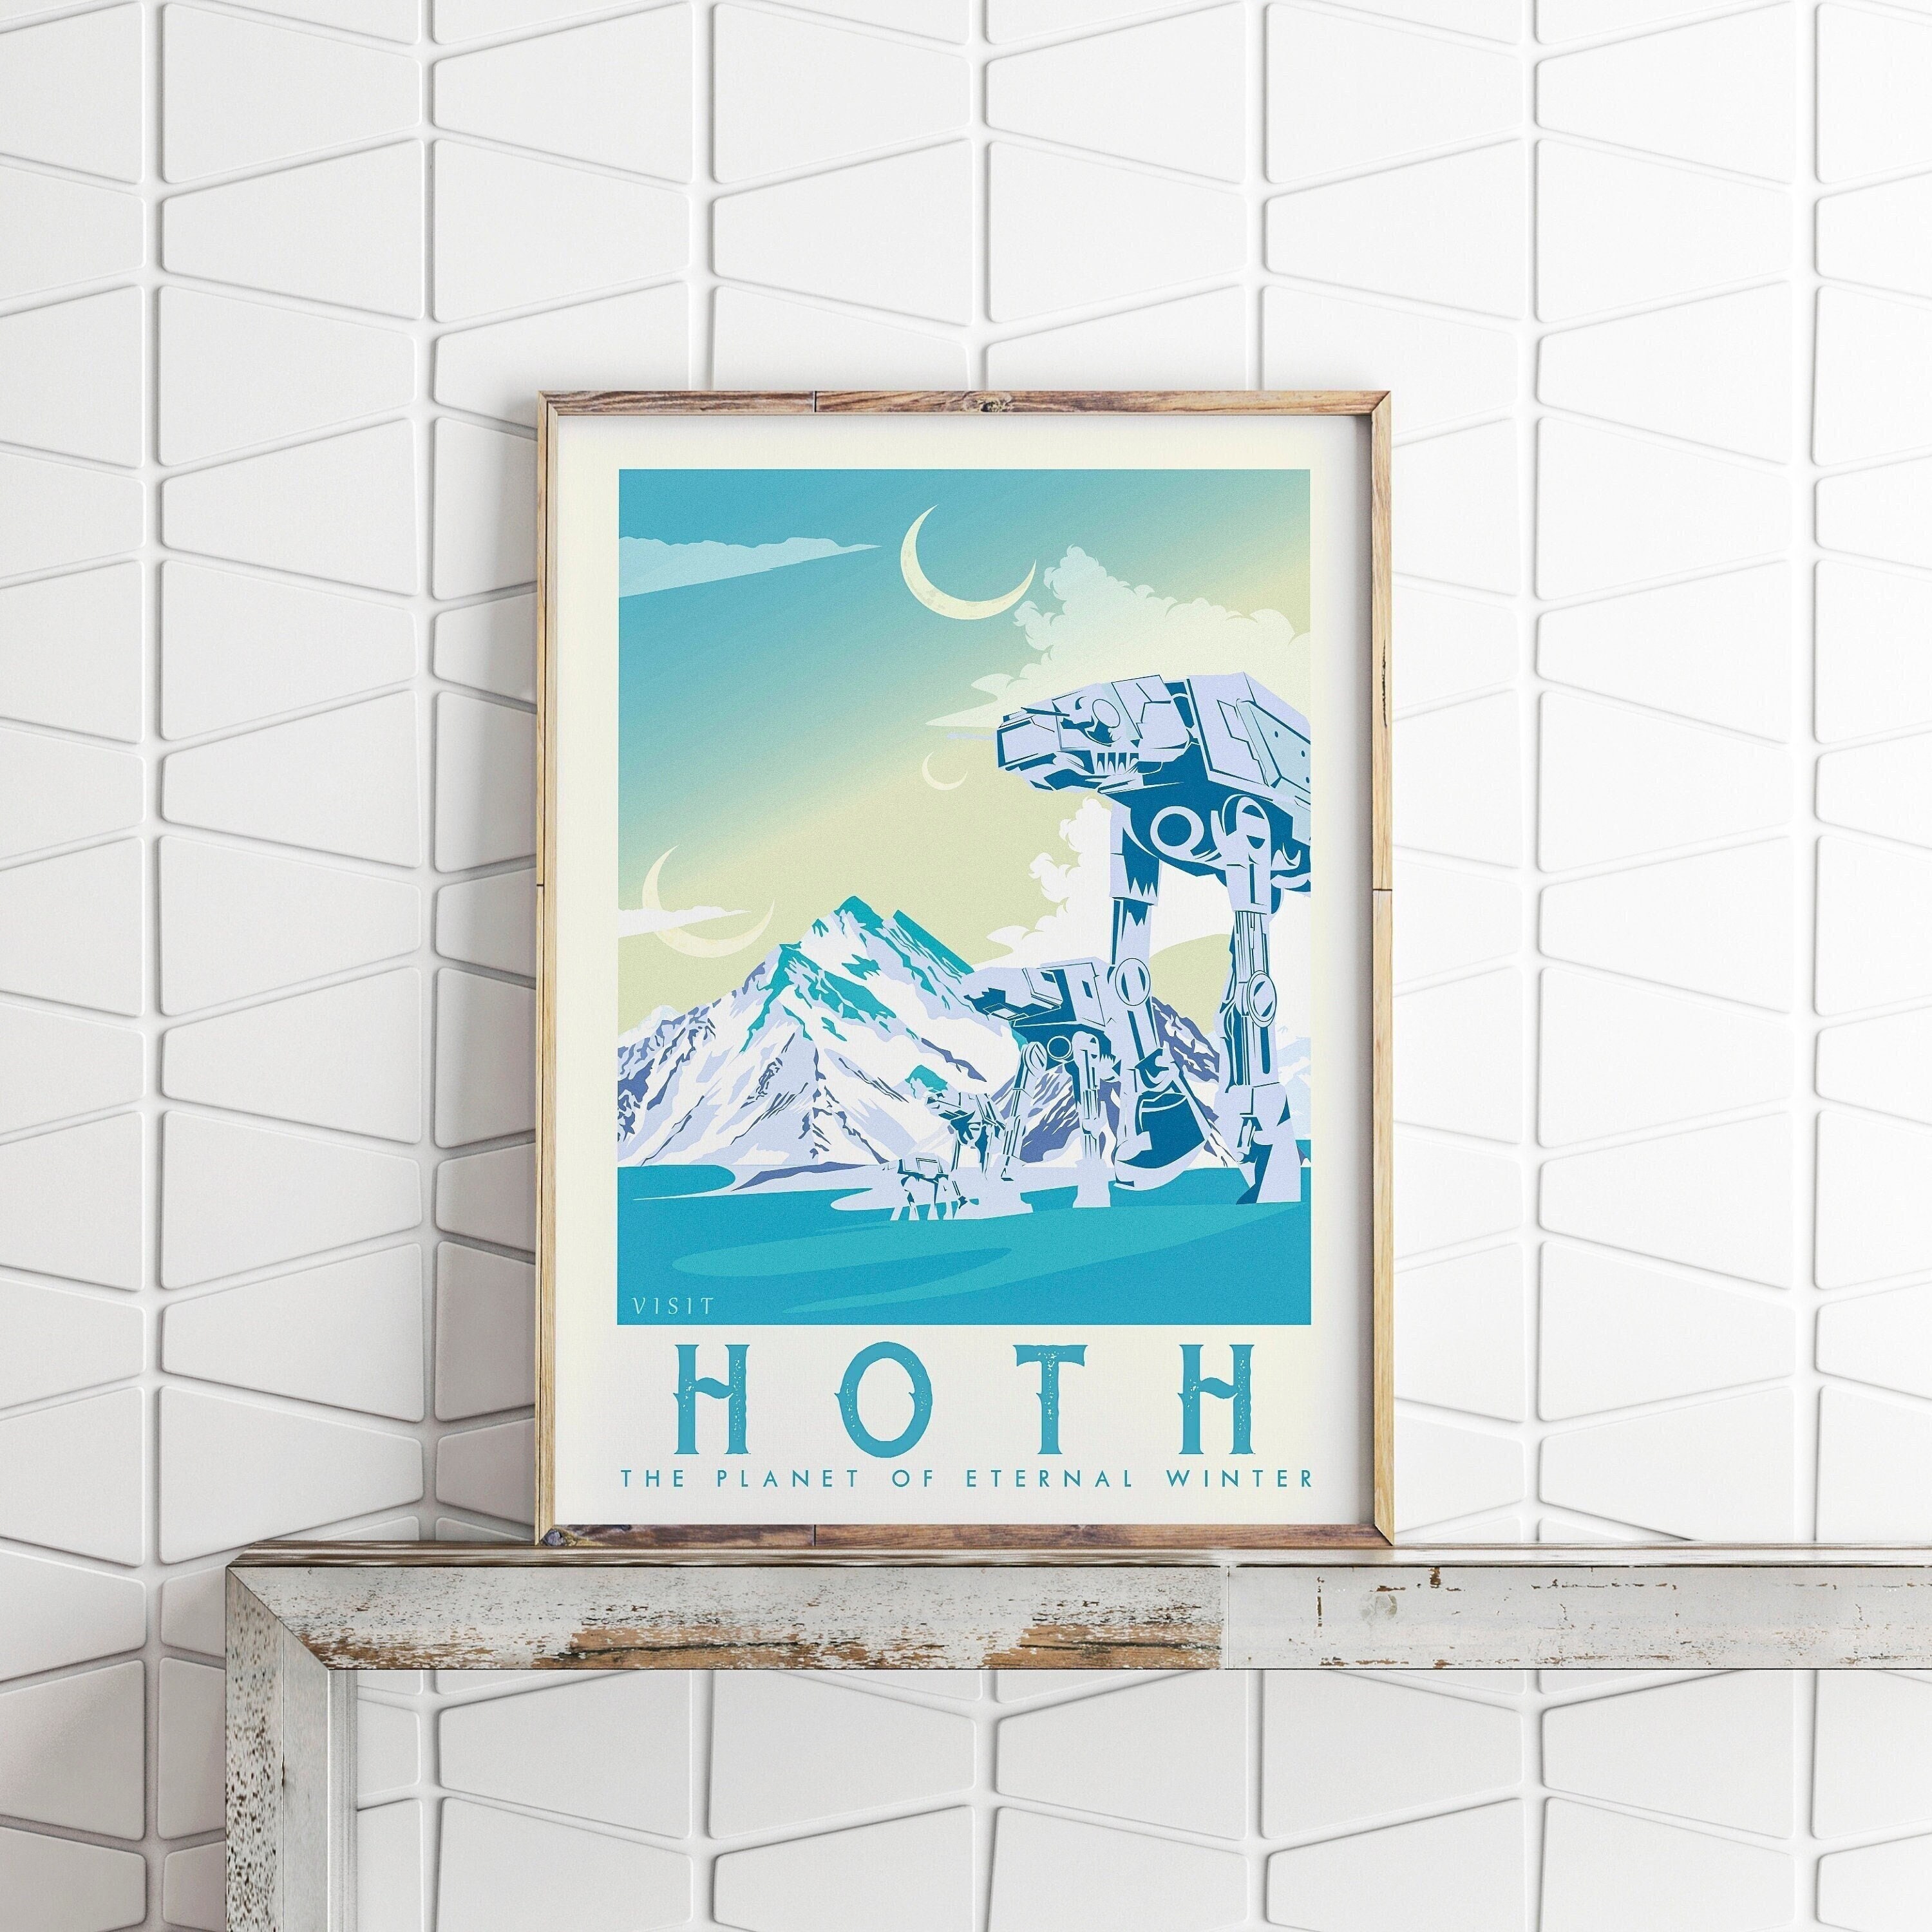 Hoth Star Wars Retro Travel Poster Star Wars Original Trilogy Prints Tatooine Hoth Endor A New Hope Empire Strikes Back